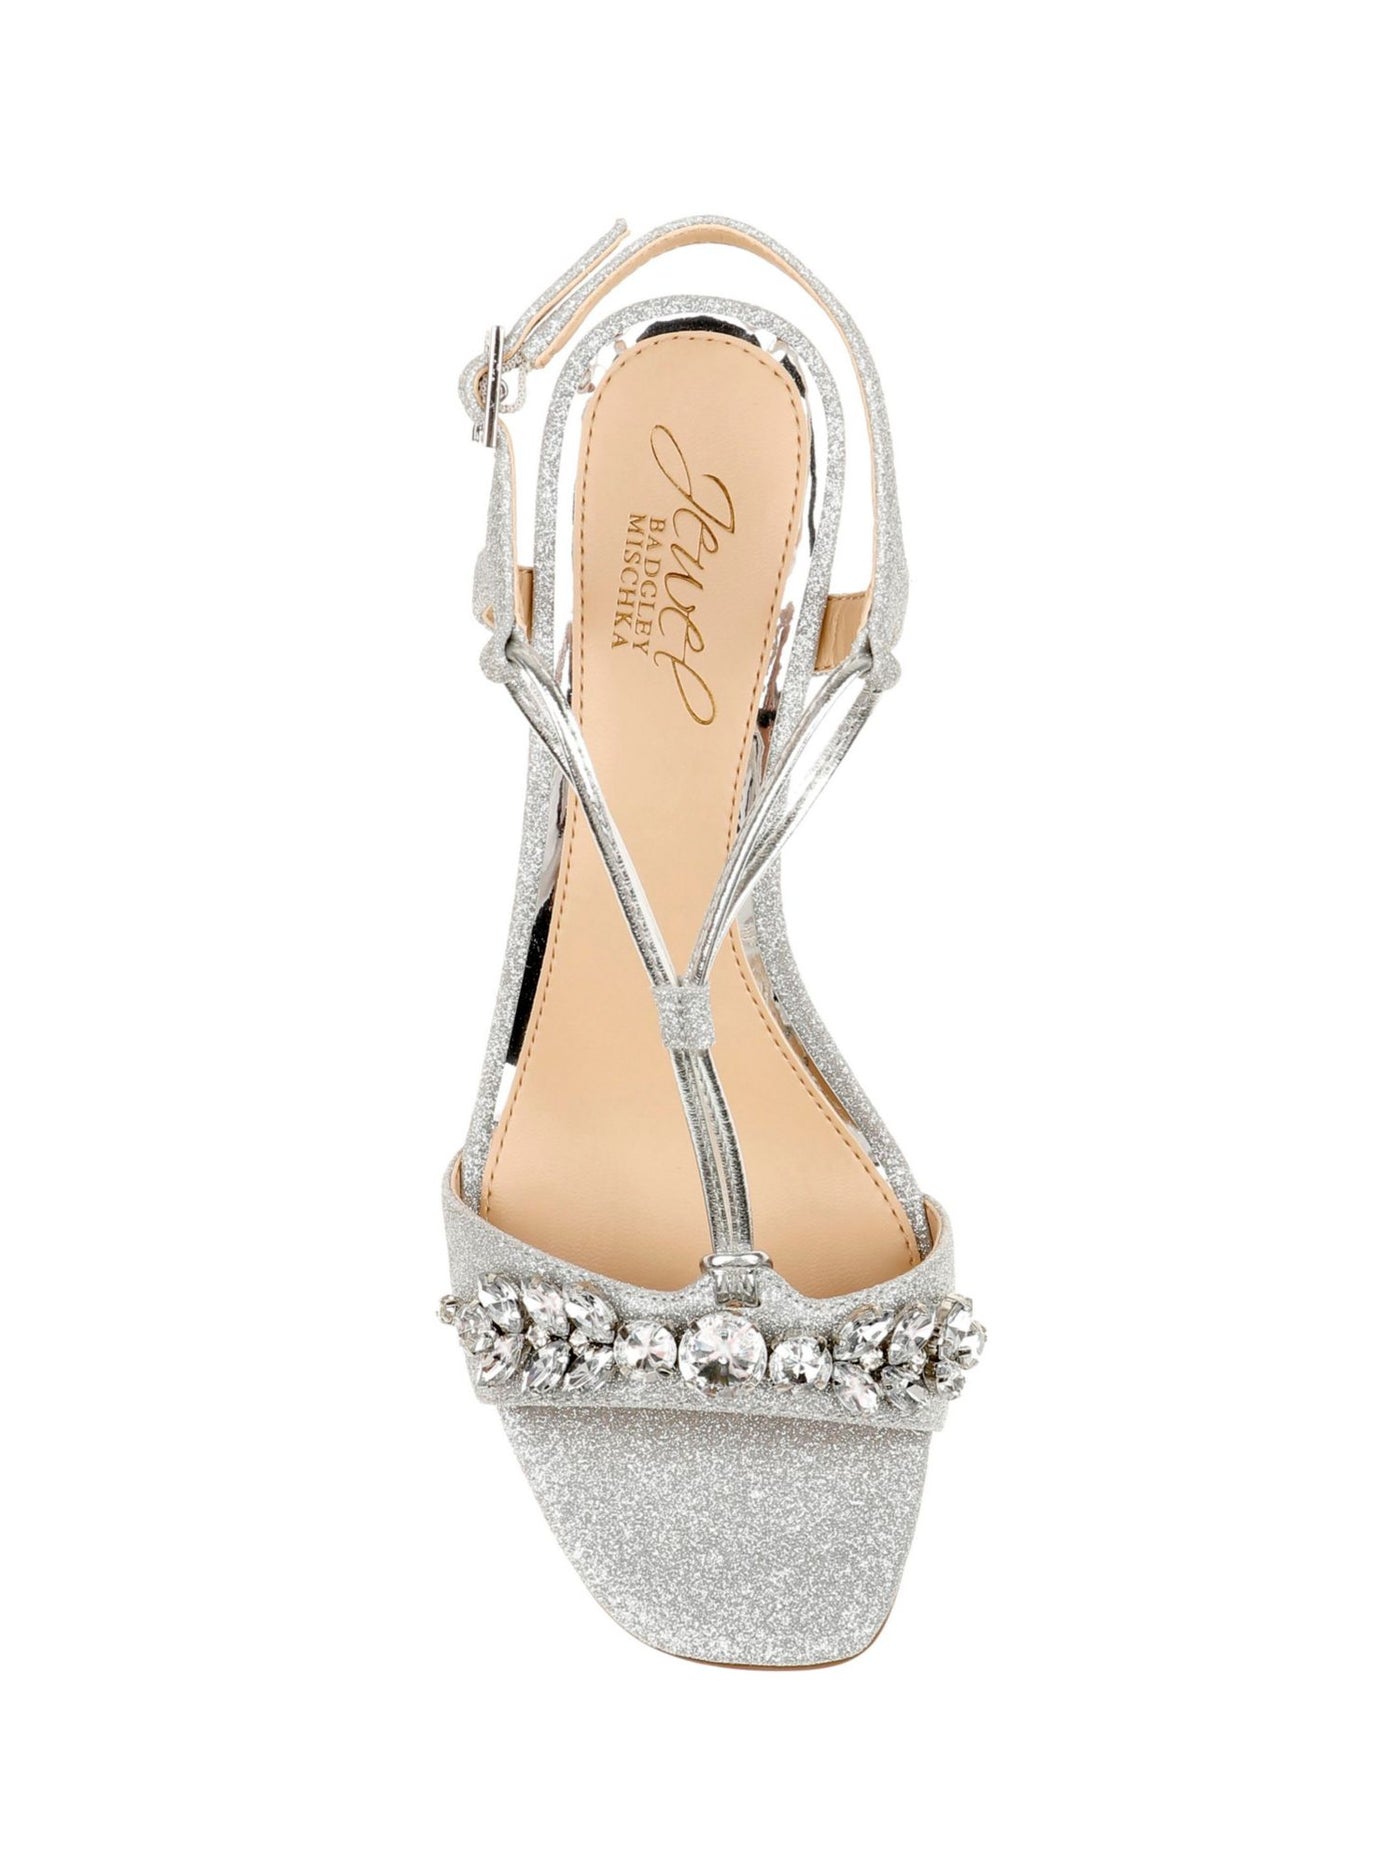 JEWEL BADGLEY MISCHKA Womens Silver Glitter Tubular Straps Comfort Adjustable Strap Gem Accent Oakes Square Toe Wedge Buckle Dress Sandals Shoes 8